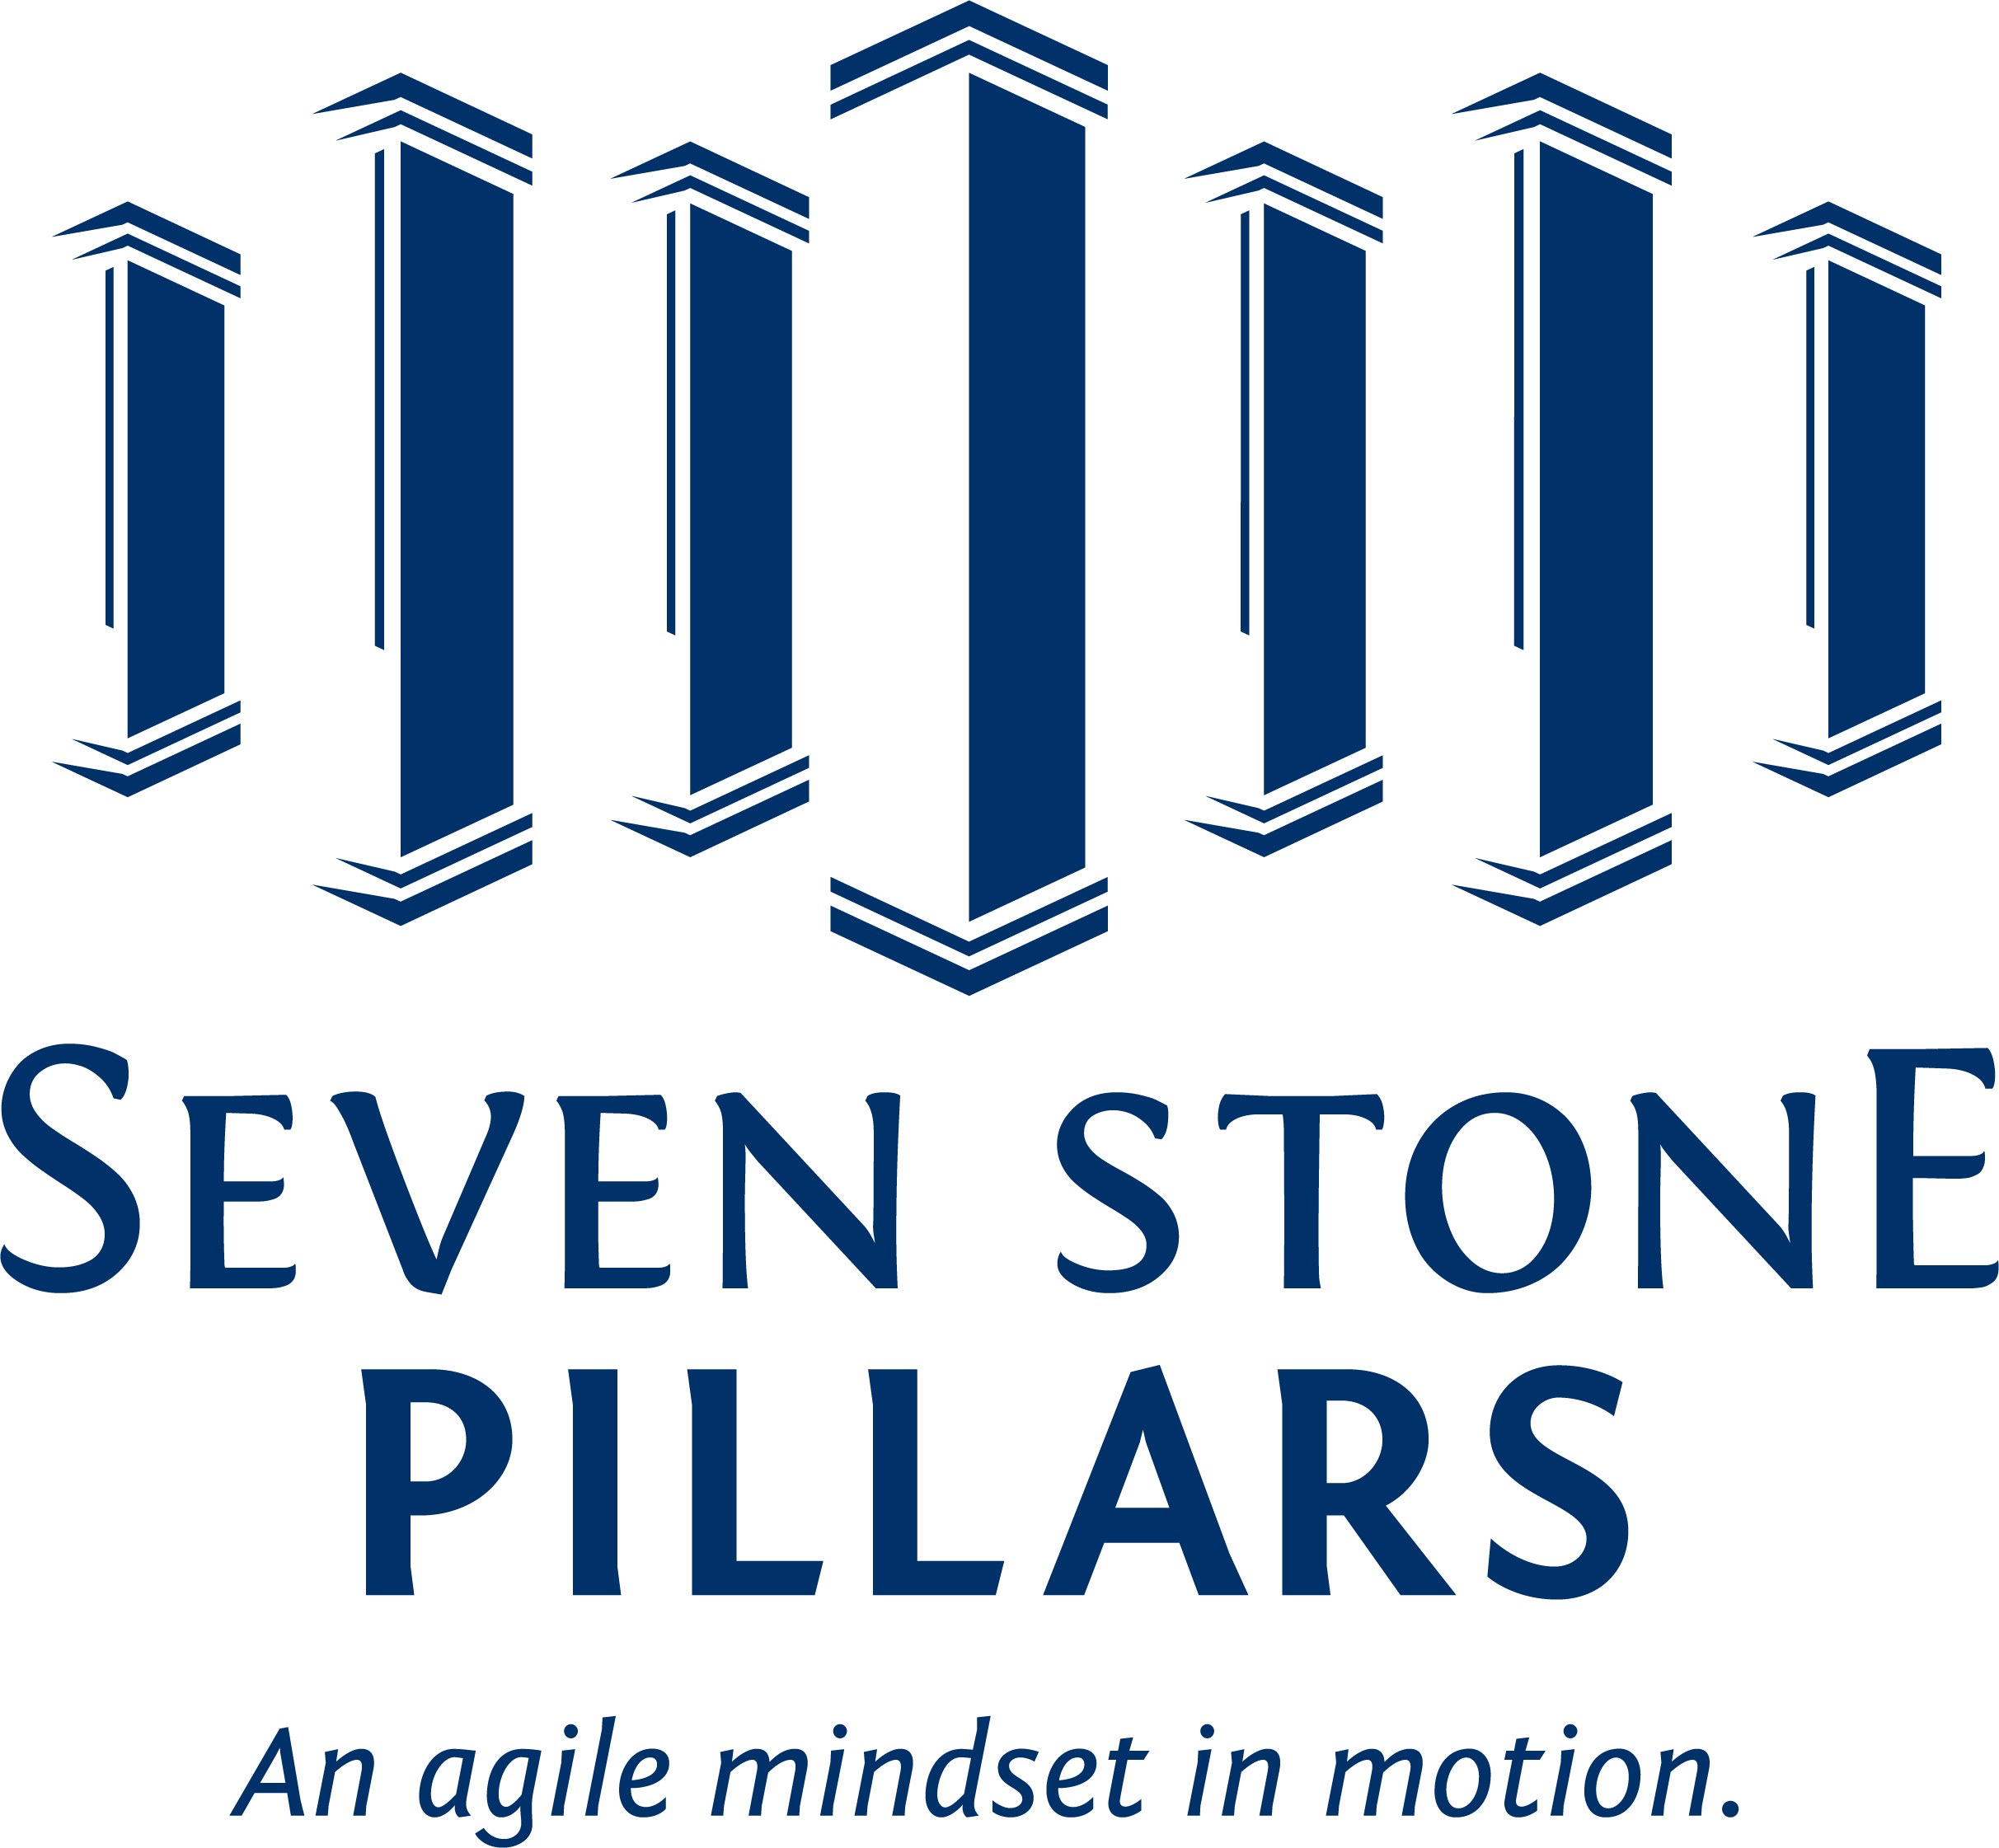 Seven Stone Pillars